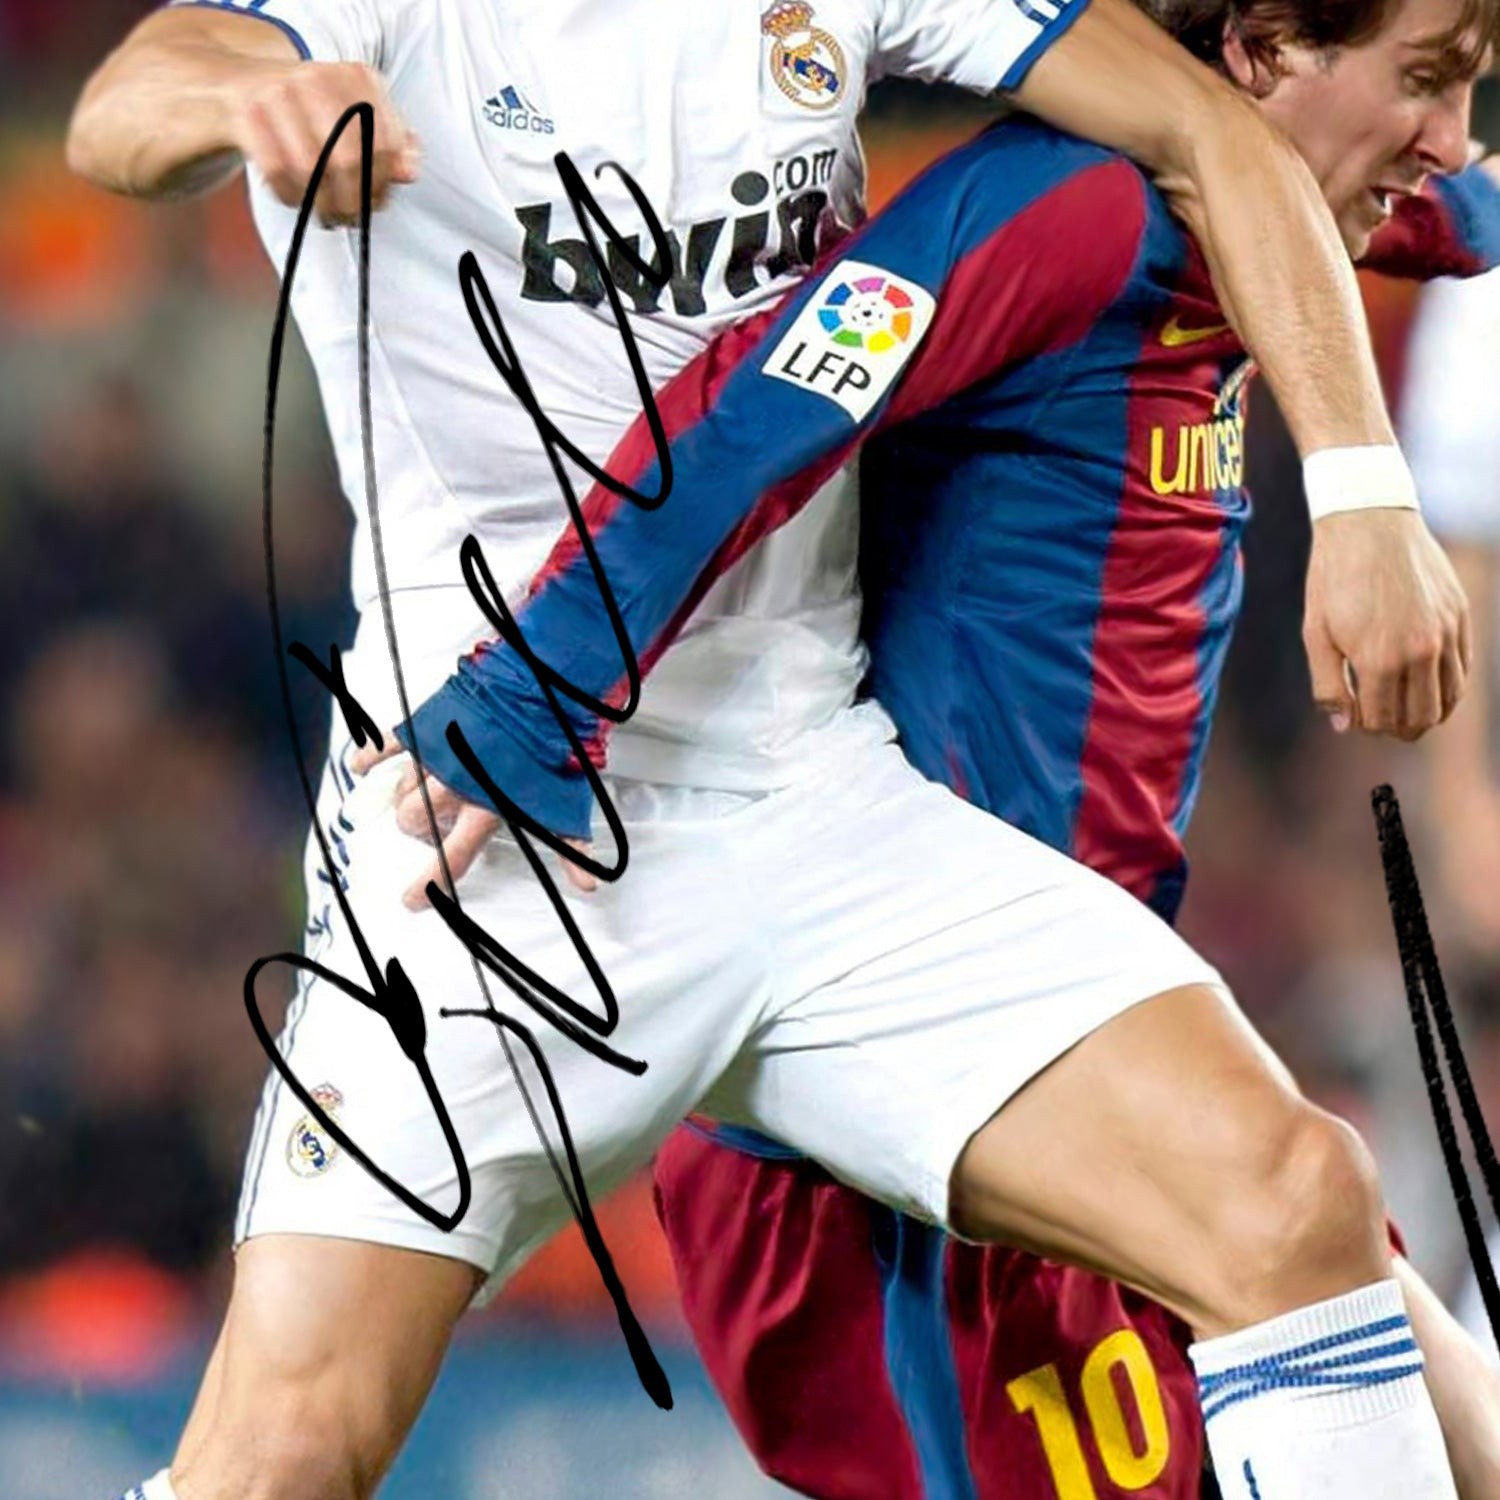 Real Madrid - Cristiano Ronaldo Mini Poster Limited Signature